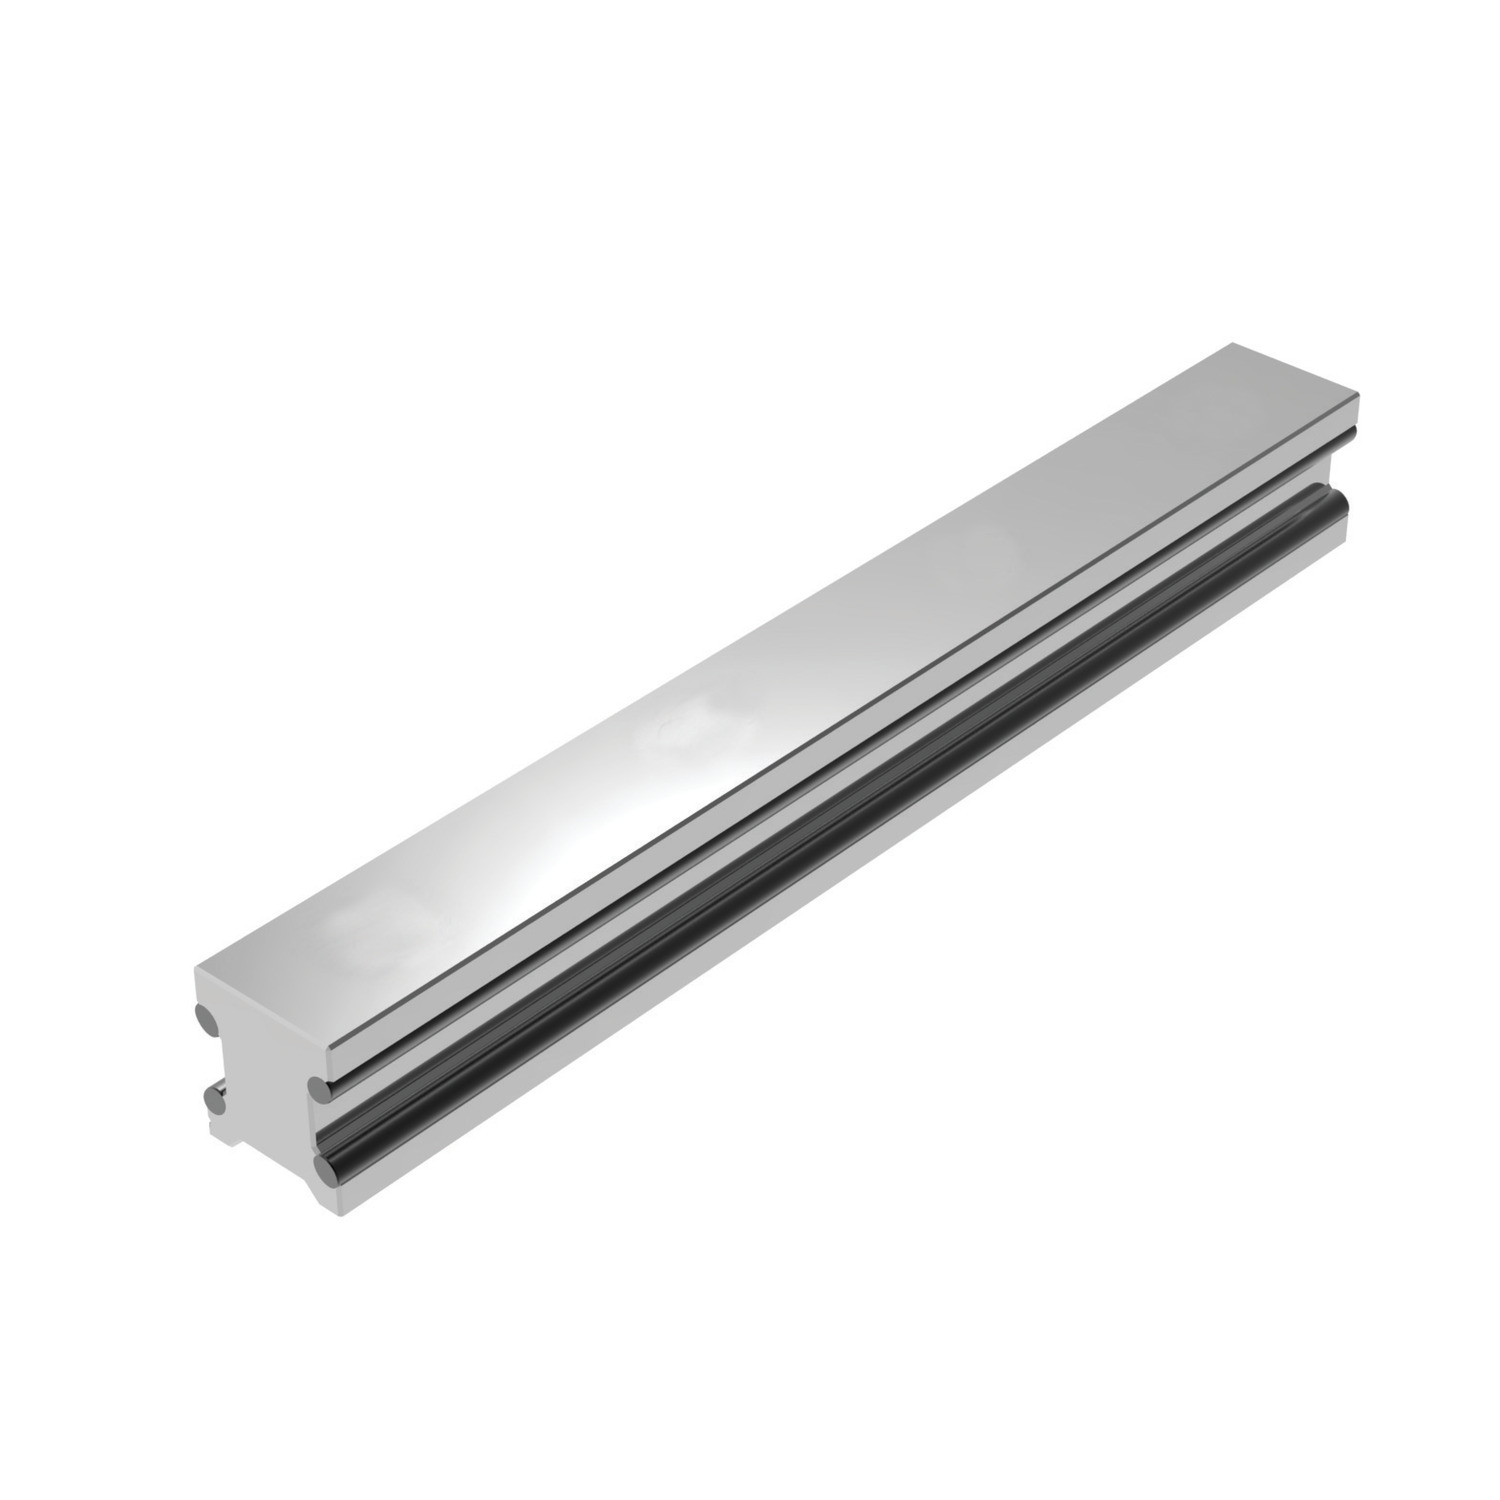 L1018.25 - 25mm Aluminium Linear Guide Rail